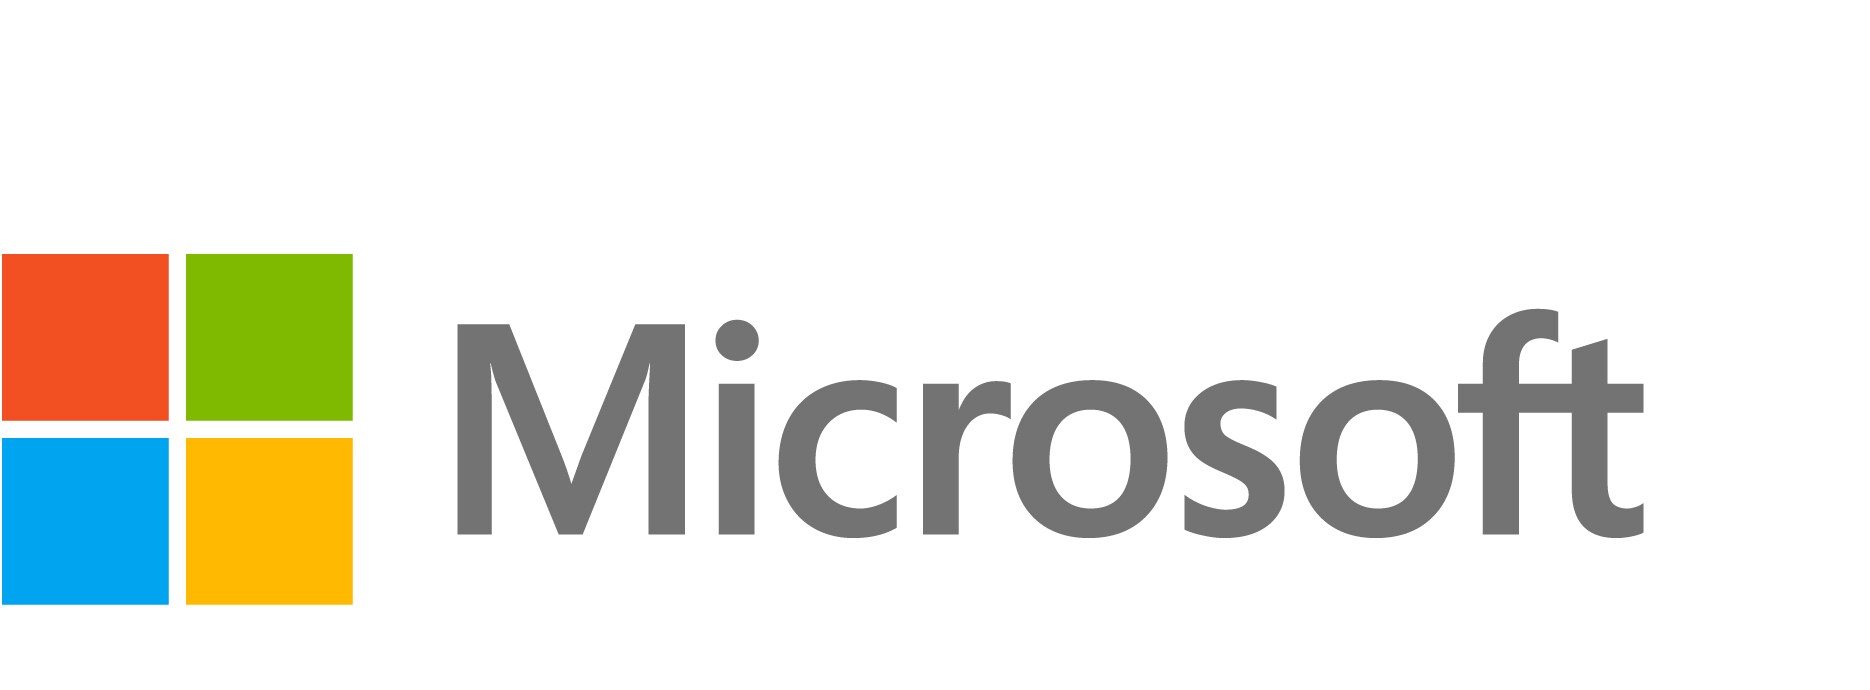 Microsoft Teams Enterprise - subscription license (1 month) - 1 license